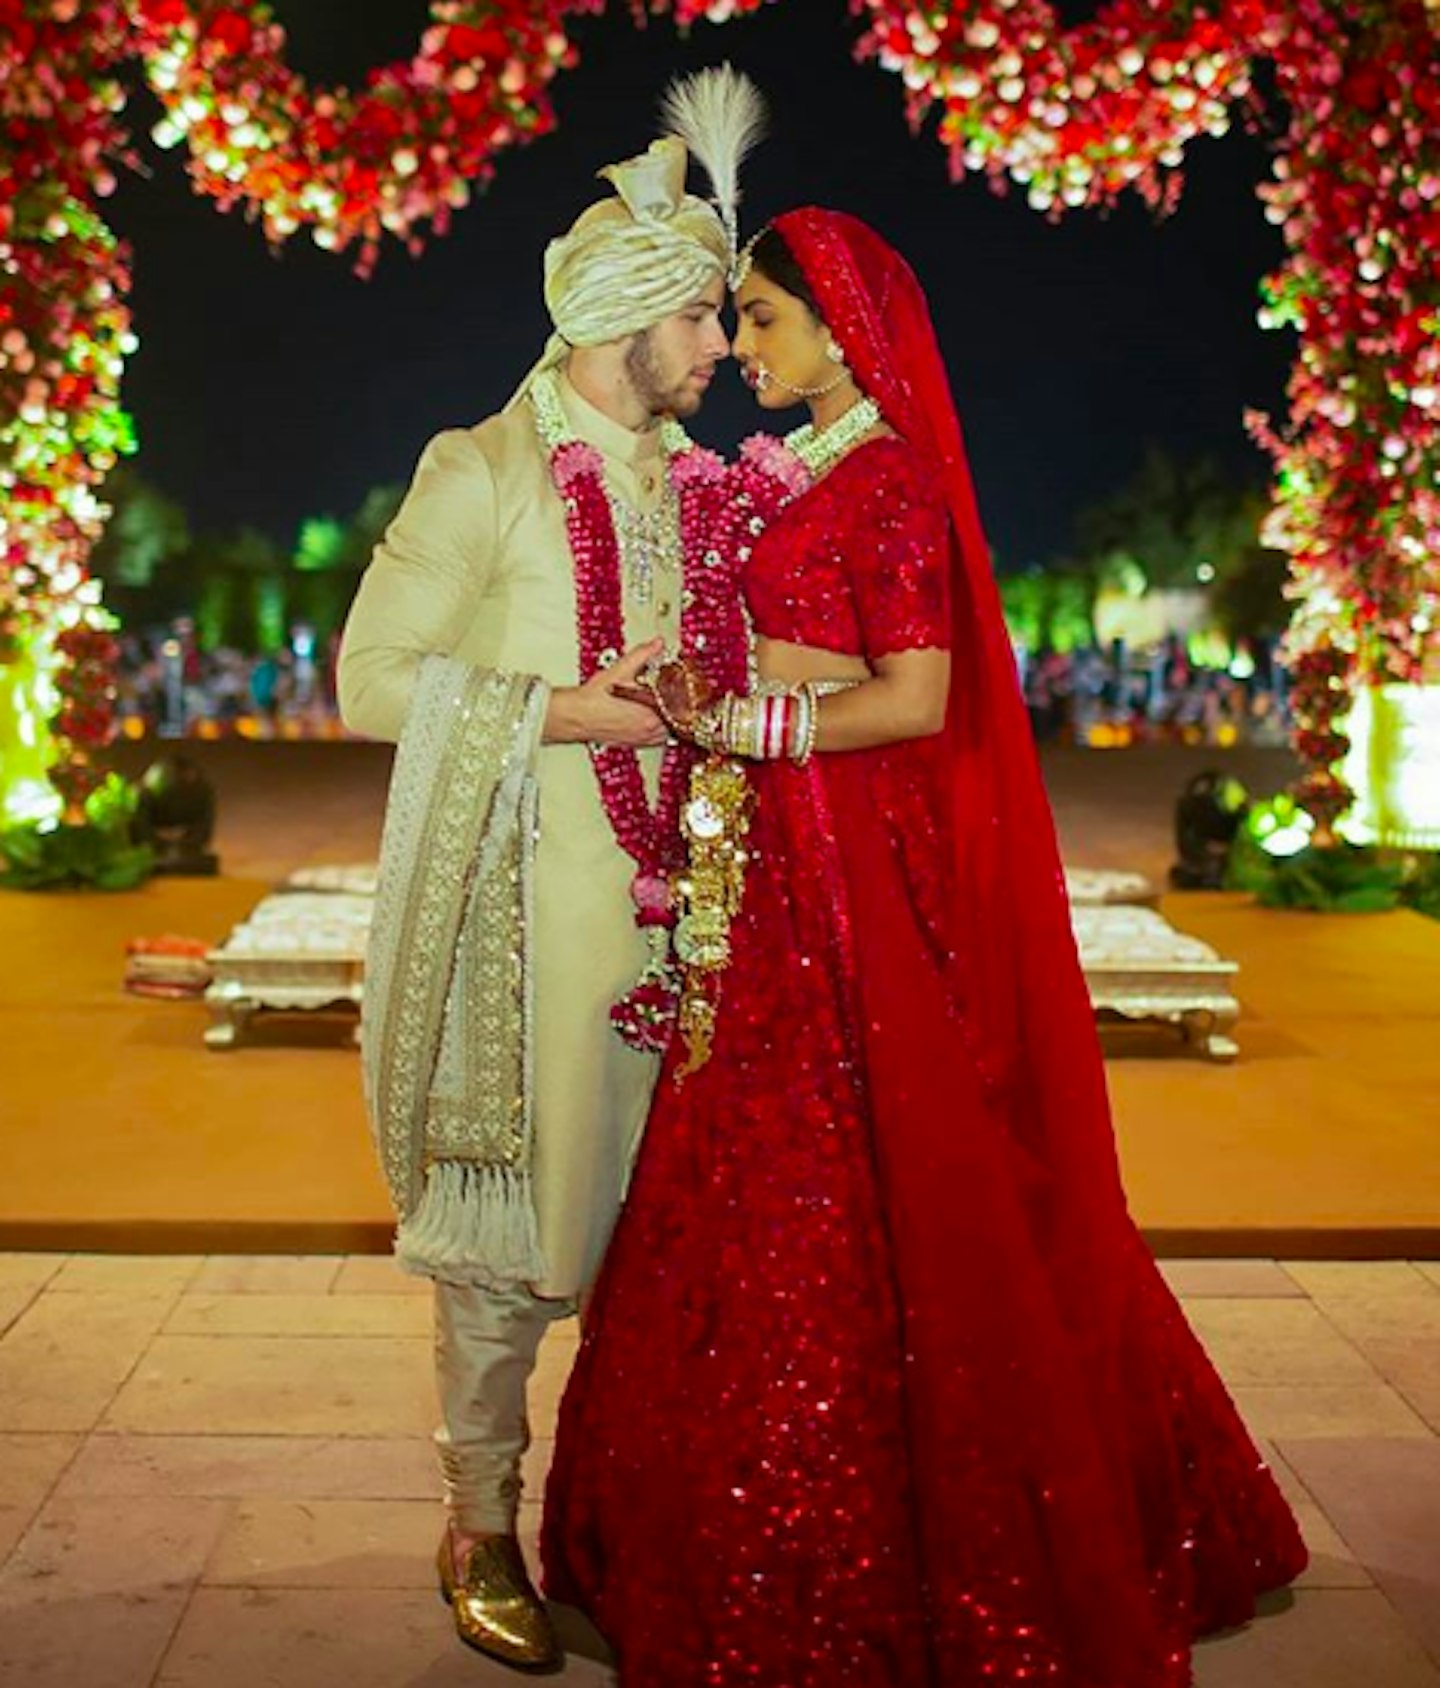 Priyanka Chopra Wedding Dress